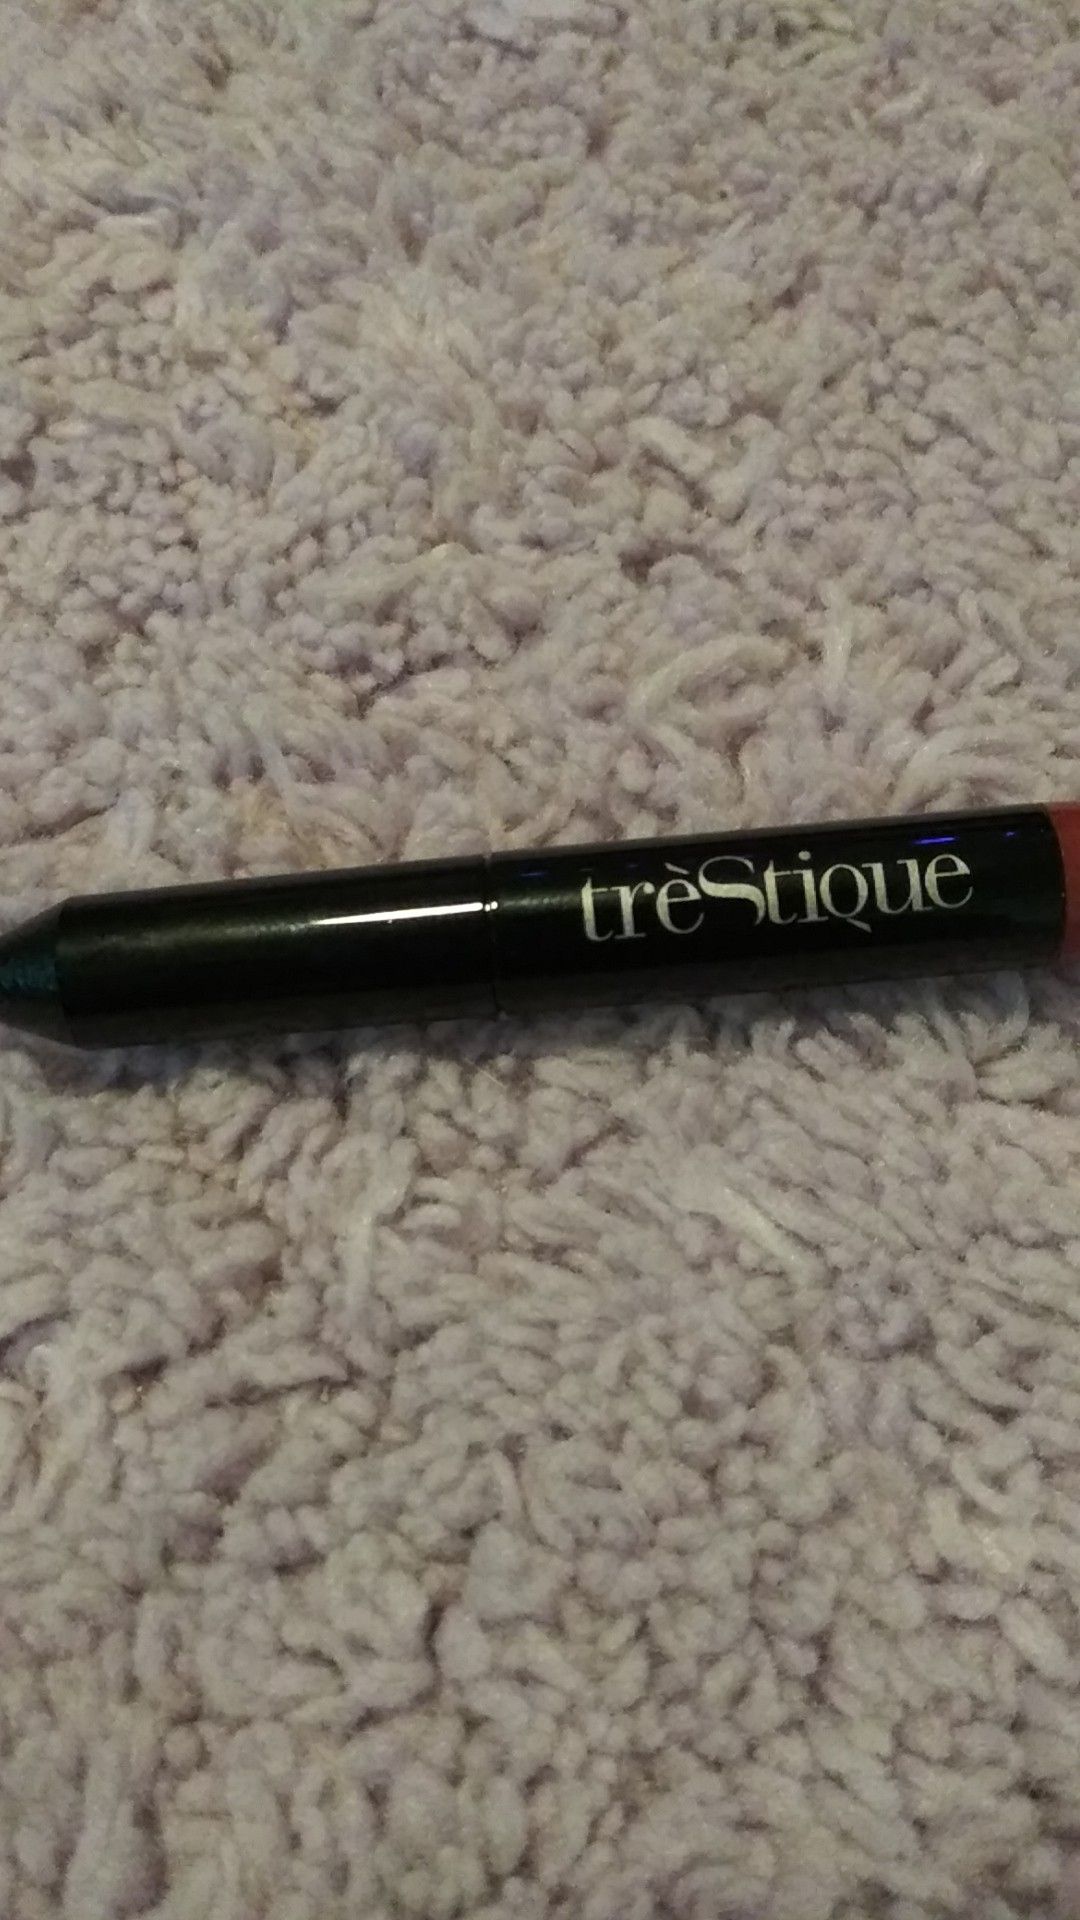 TreStique Lip Stick "Lip glaze"